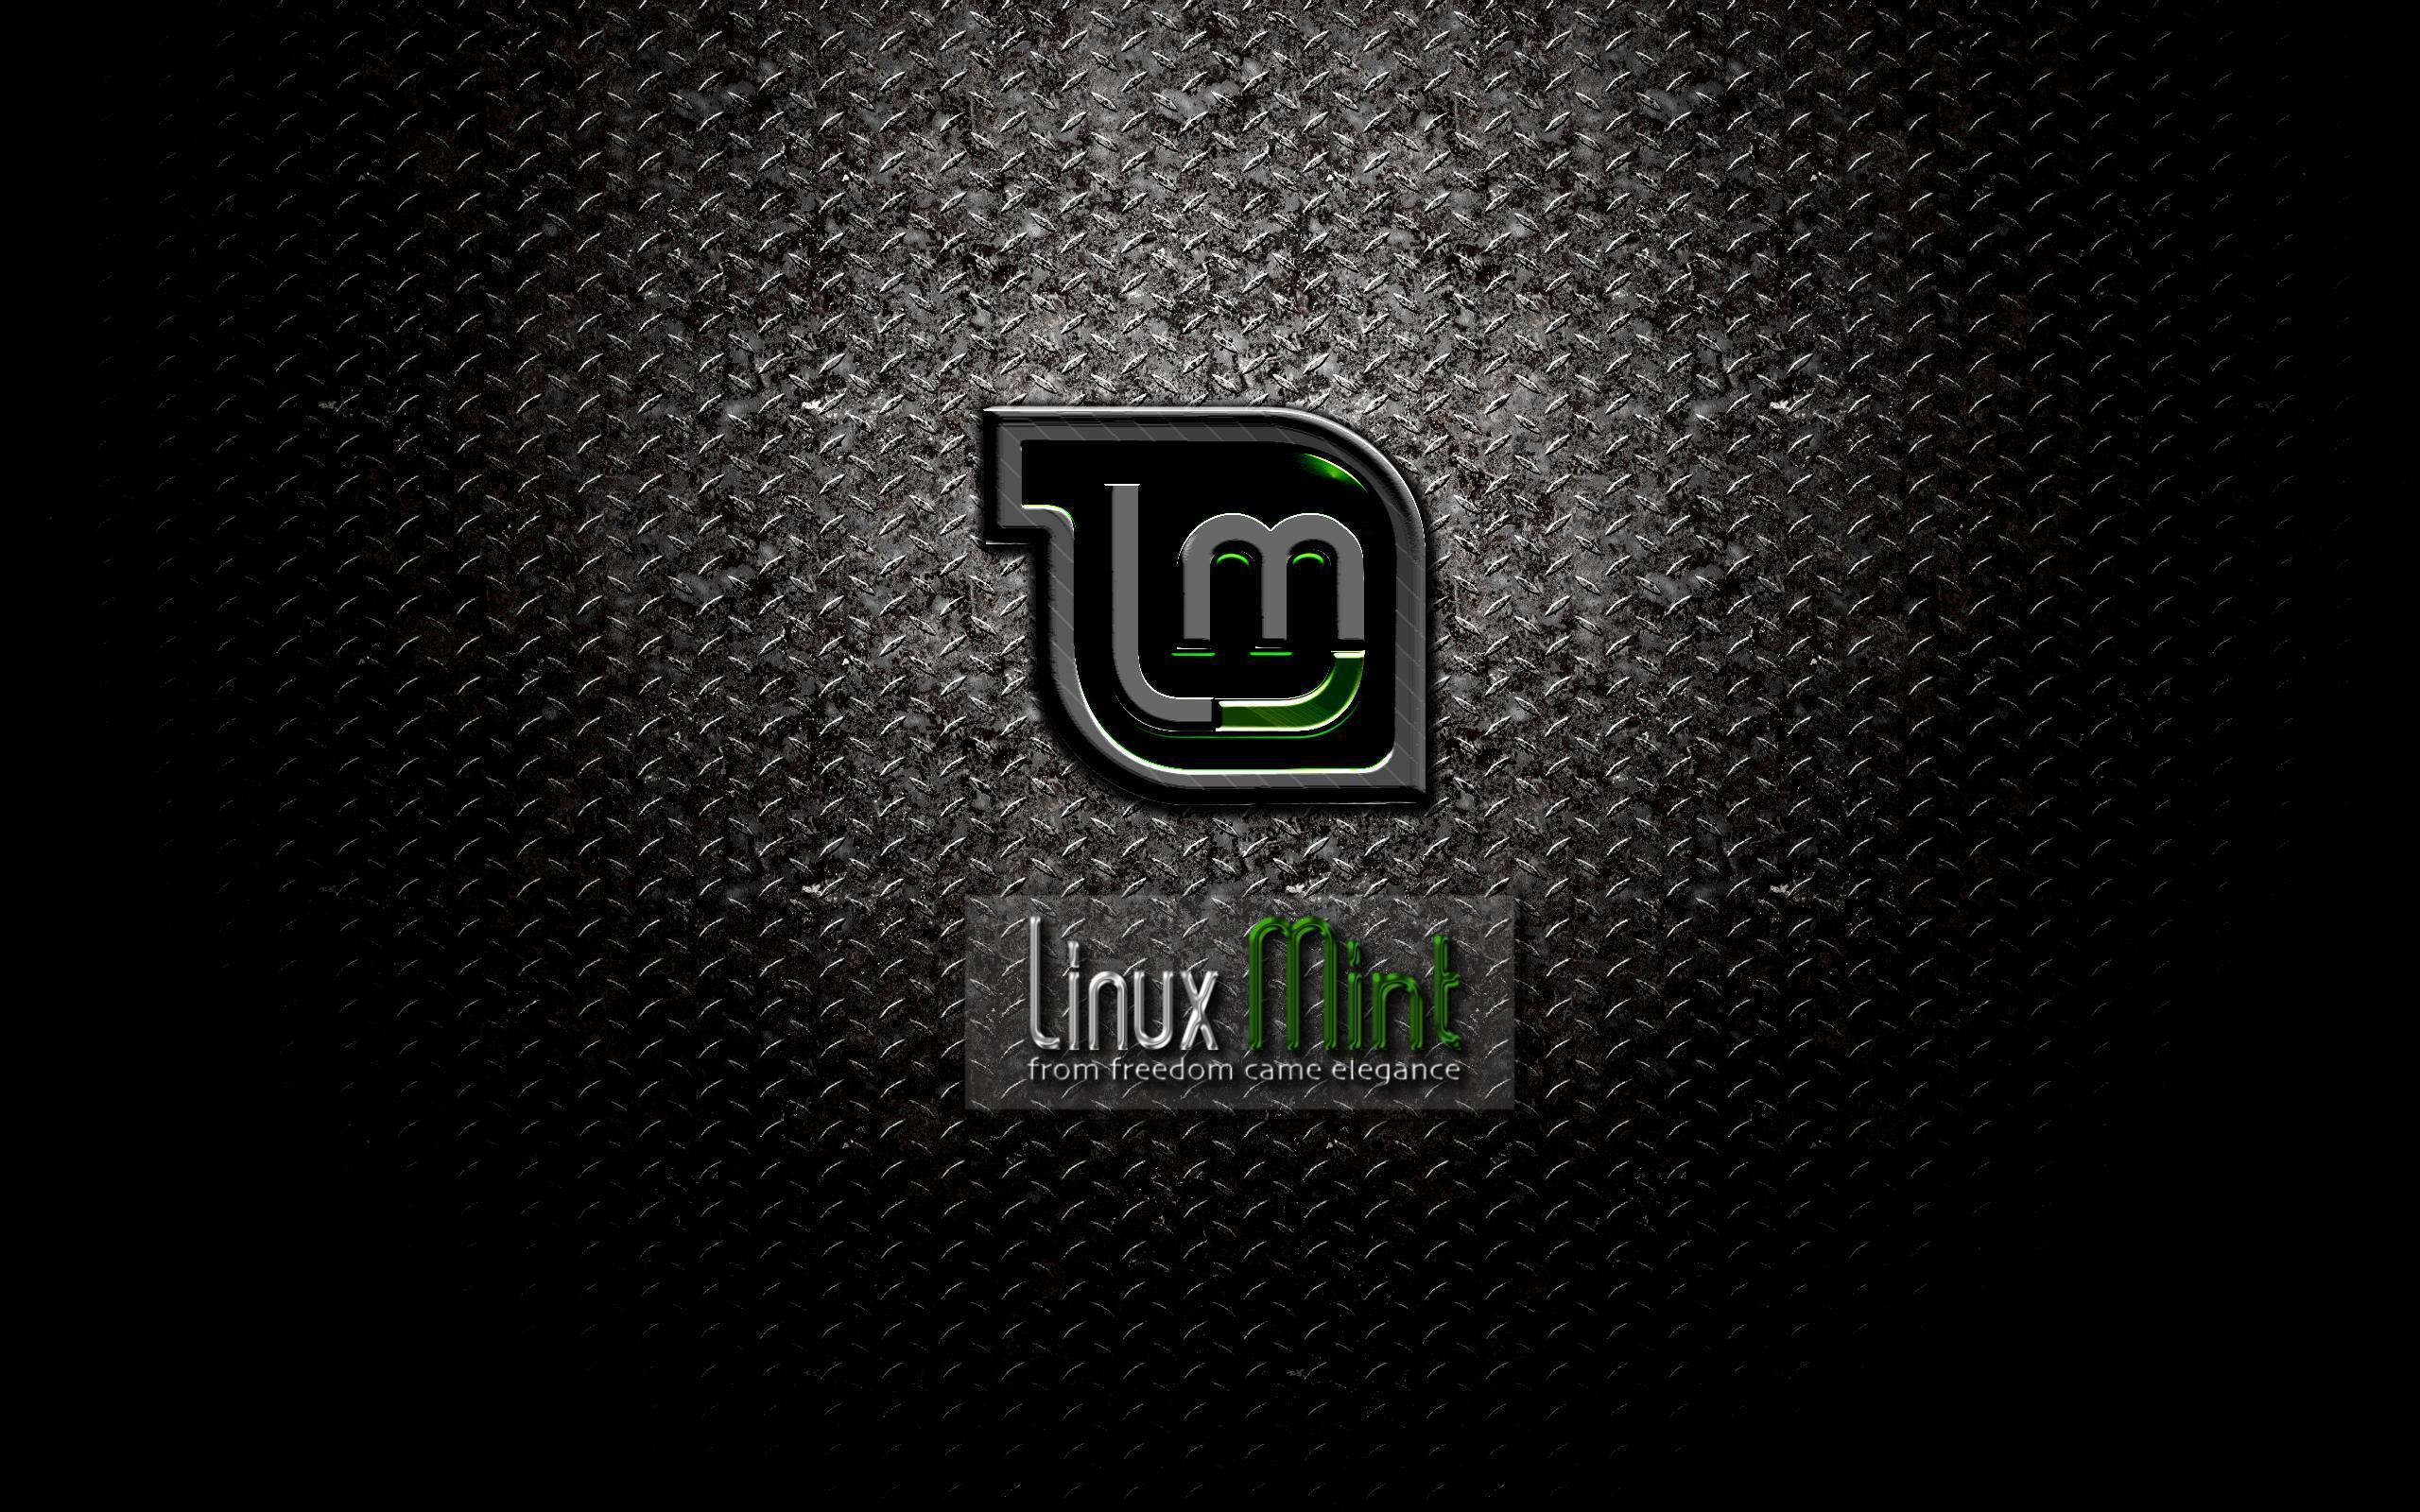 linux mint wallpaper blue